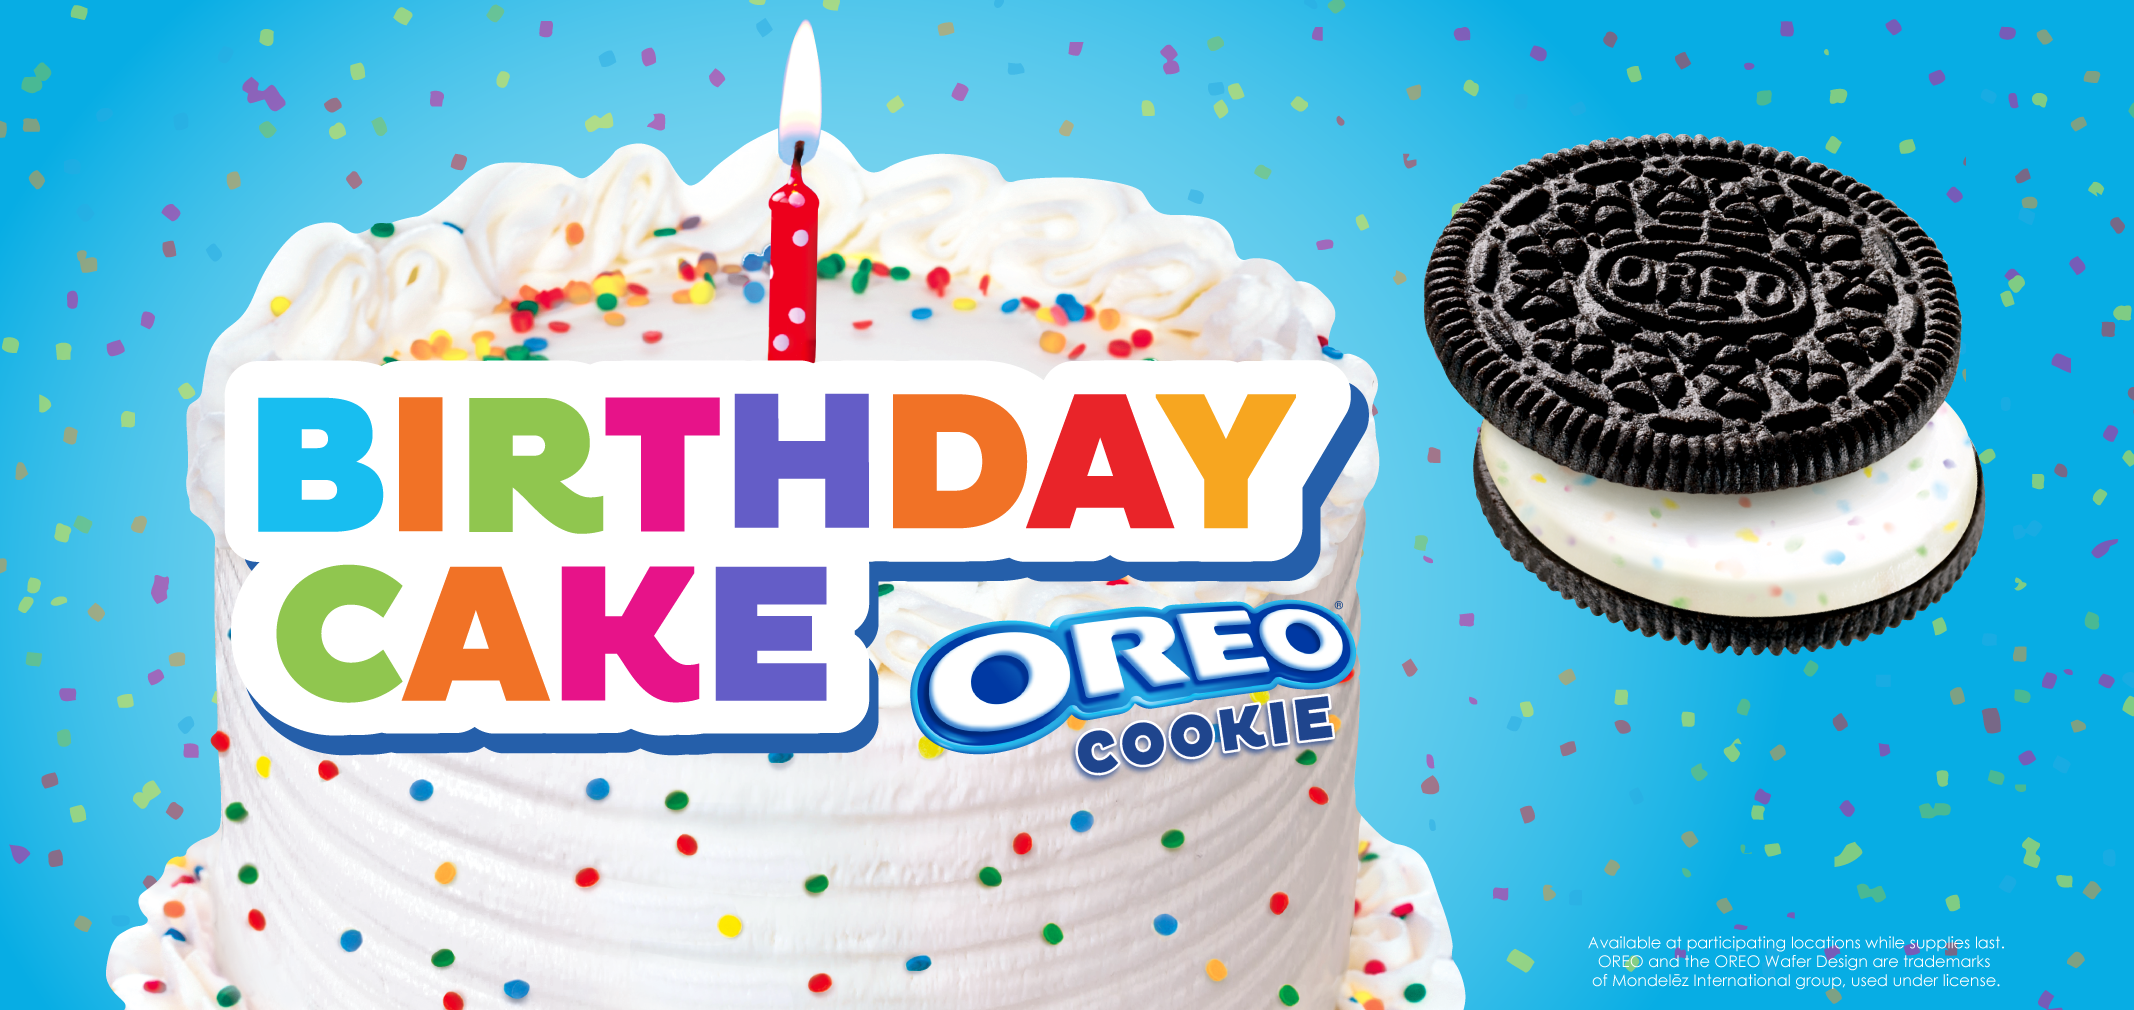 Birthday Cake Oreo® Cookie label image